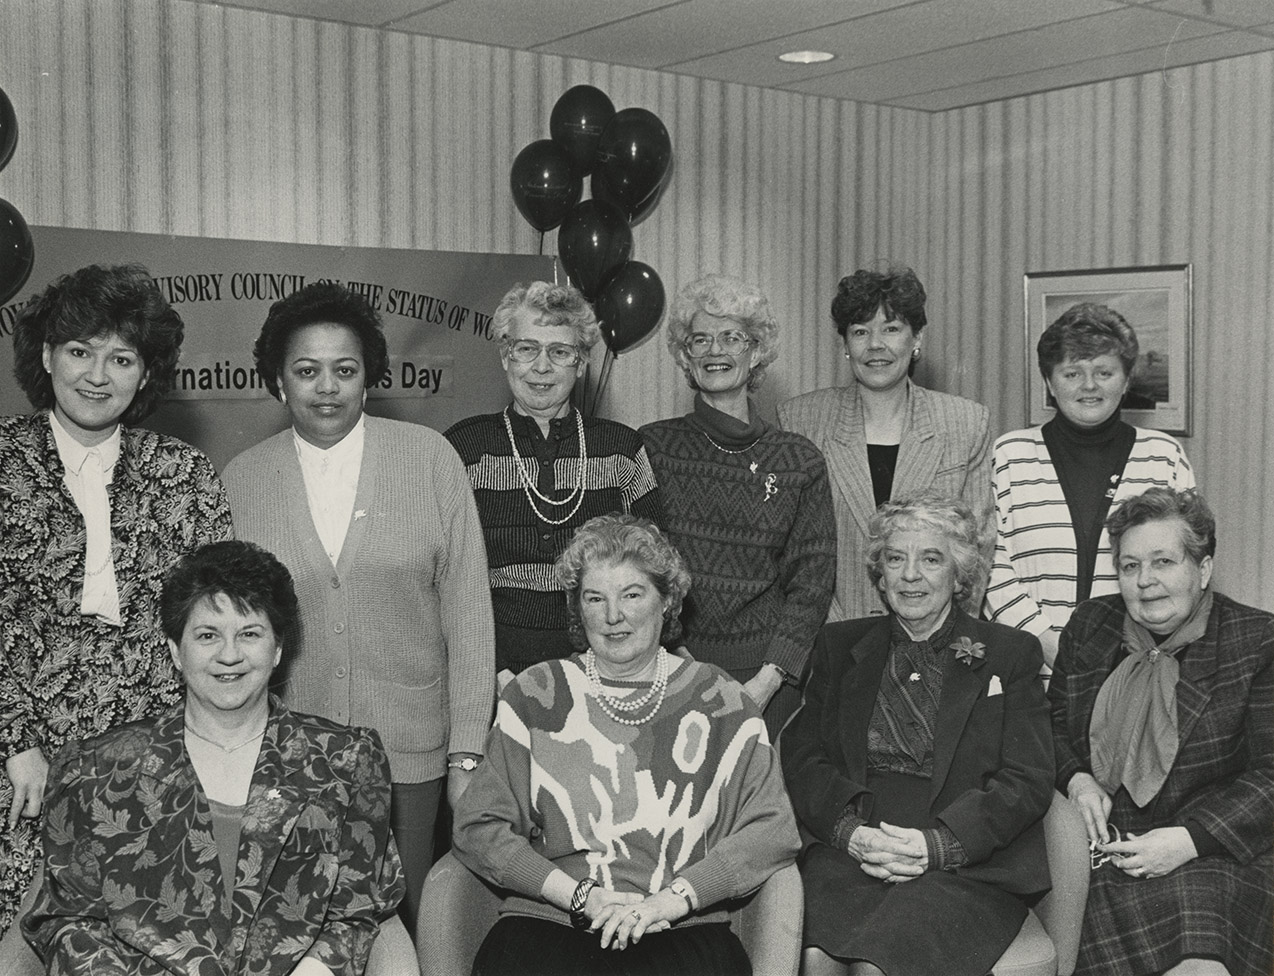 Nova Scotia Advisory Council on the Status of Women Council Members, March 1989